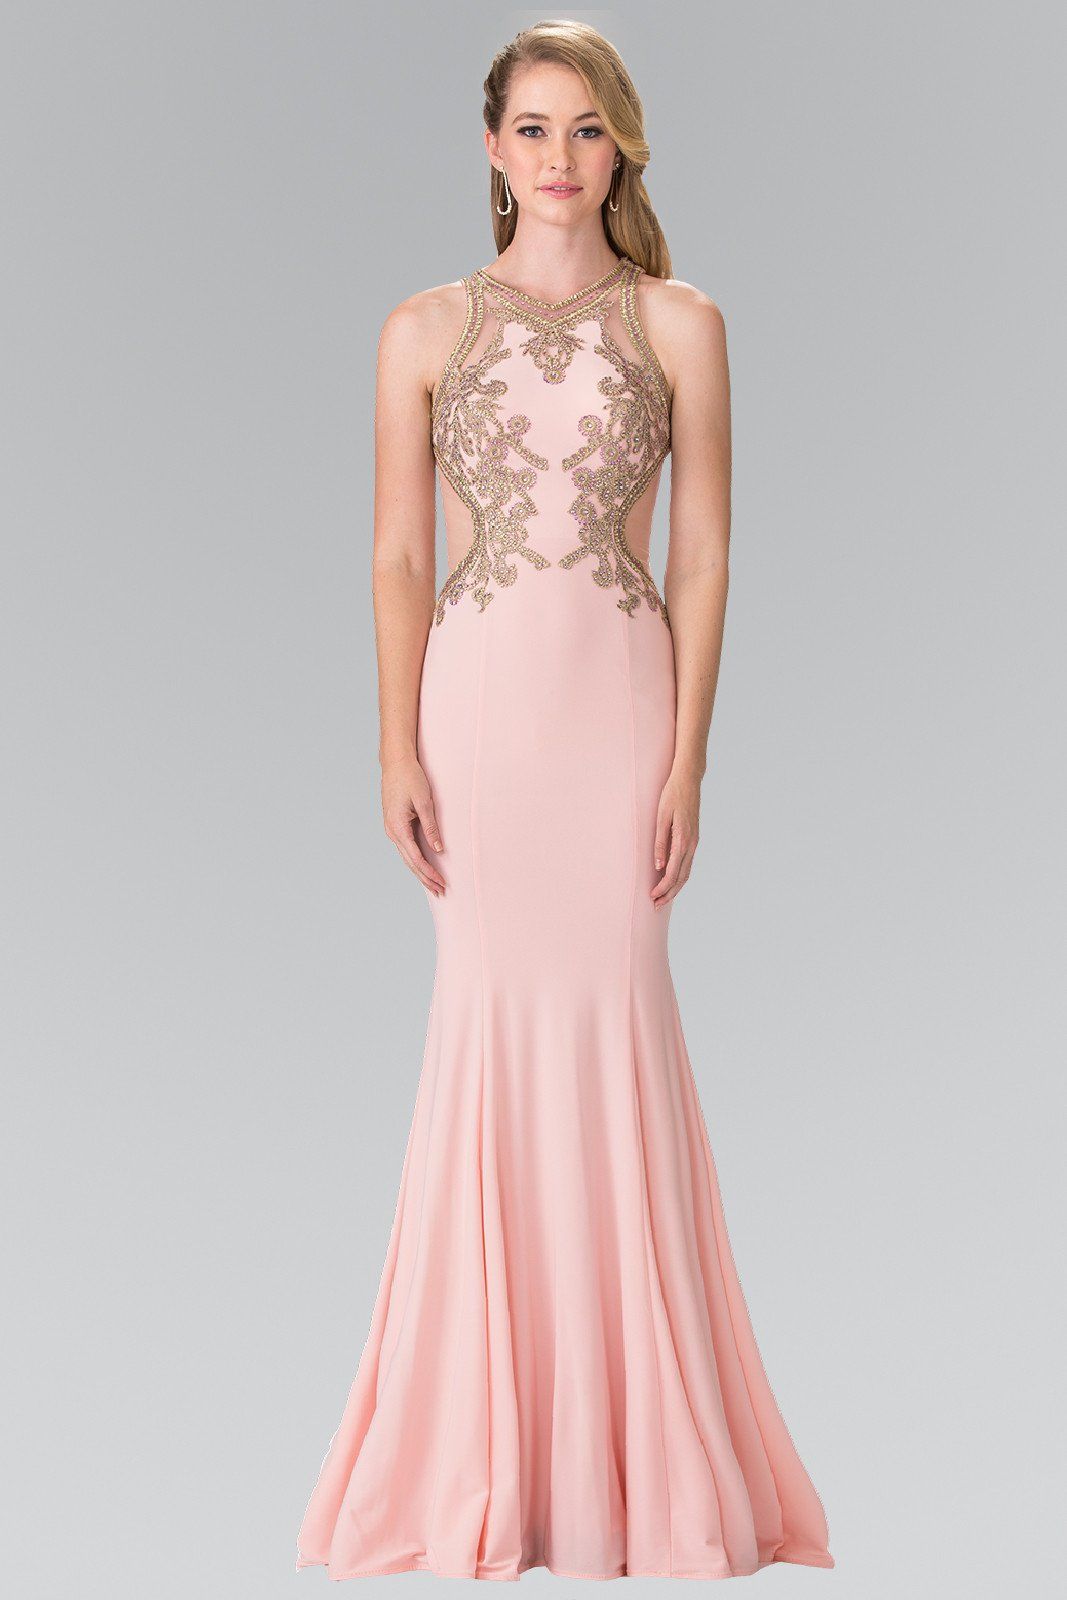 Long Sleeveless Beaded Illusion Dress by Elizabeth K GL2321-Long Formal Dresses-ABC Fashion